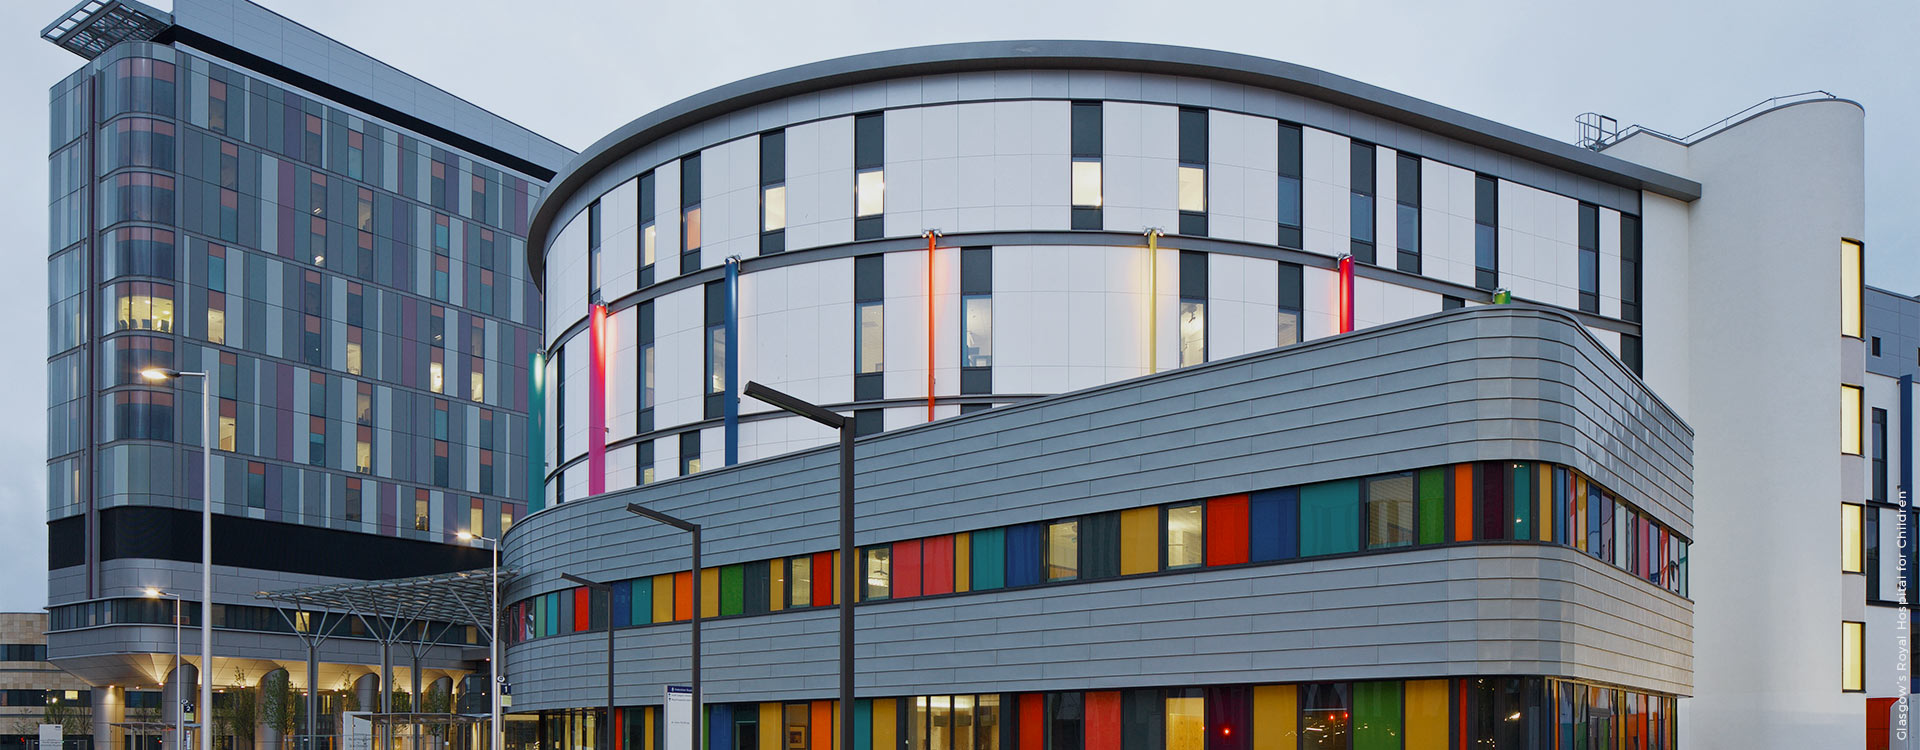 Engineering Royal Hospital for Children in Glasgow